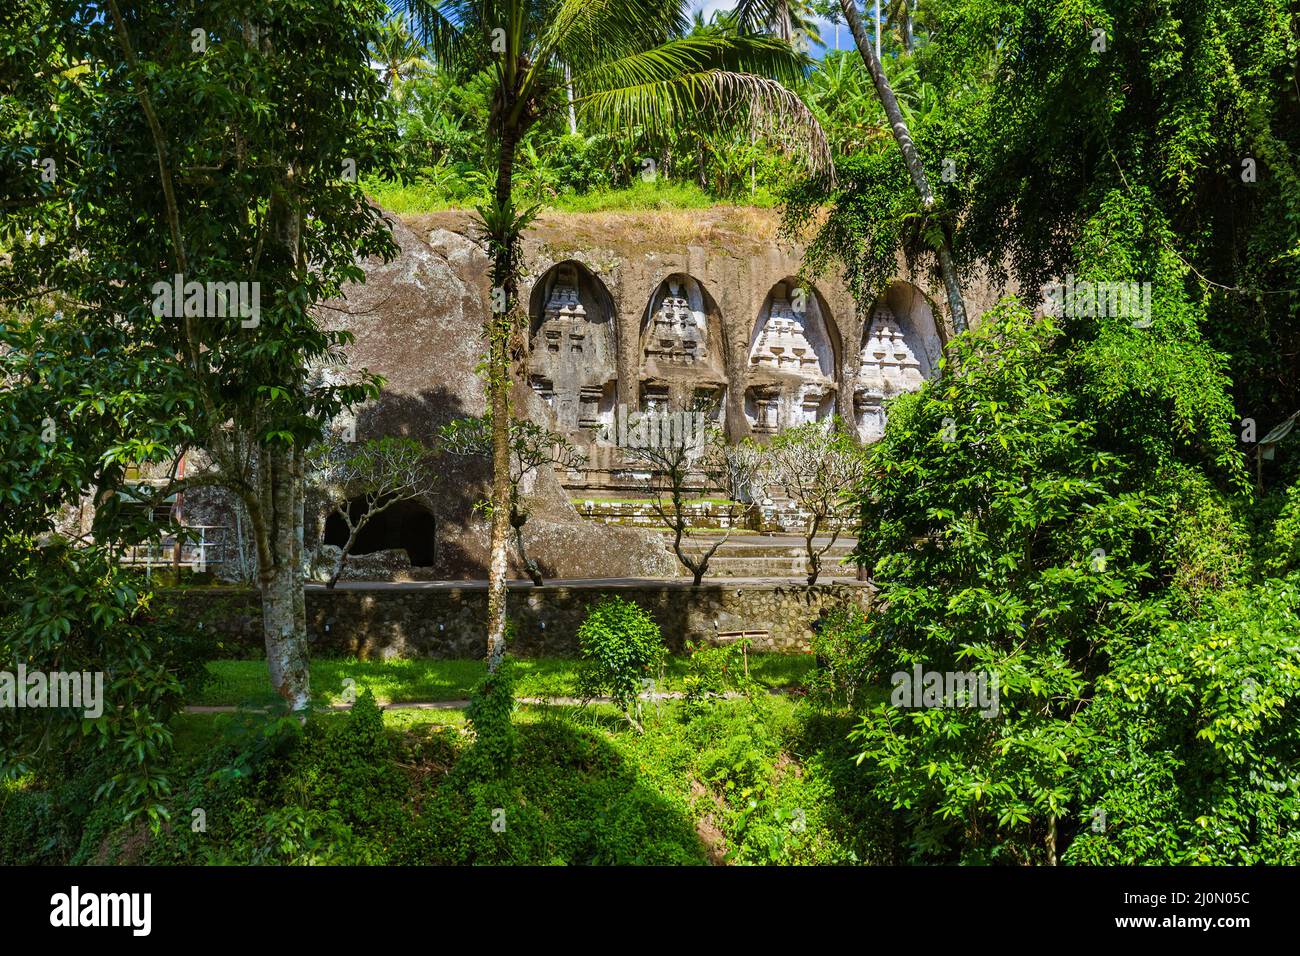 Ganung Kawi Temple in Bali Island - Indonesia Stock Photo